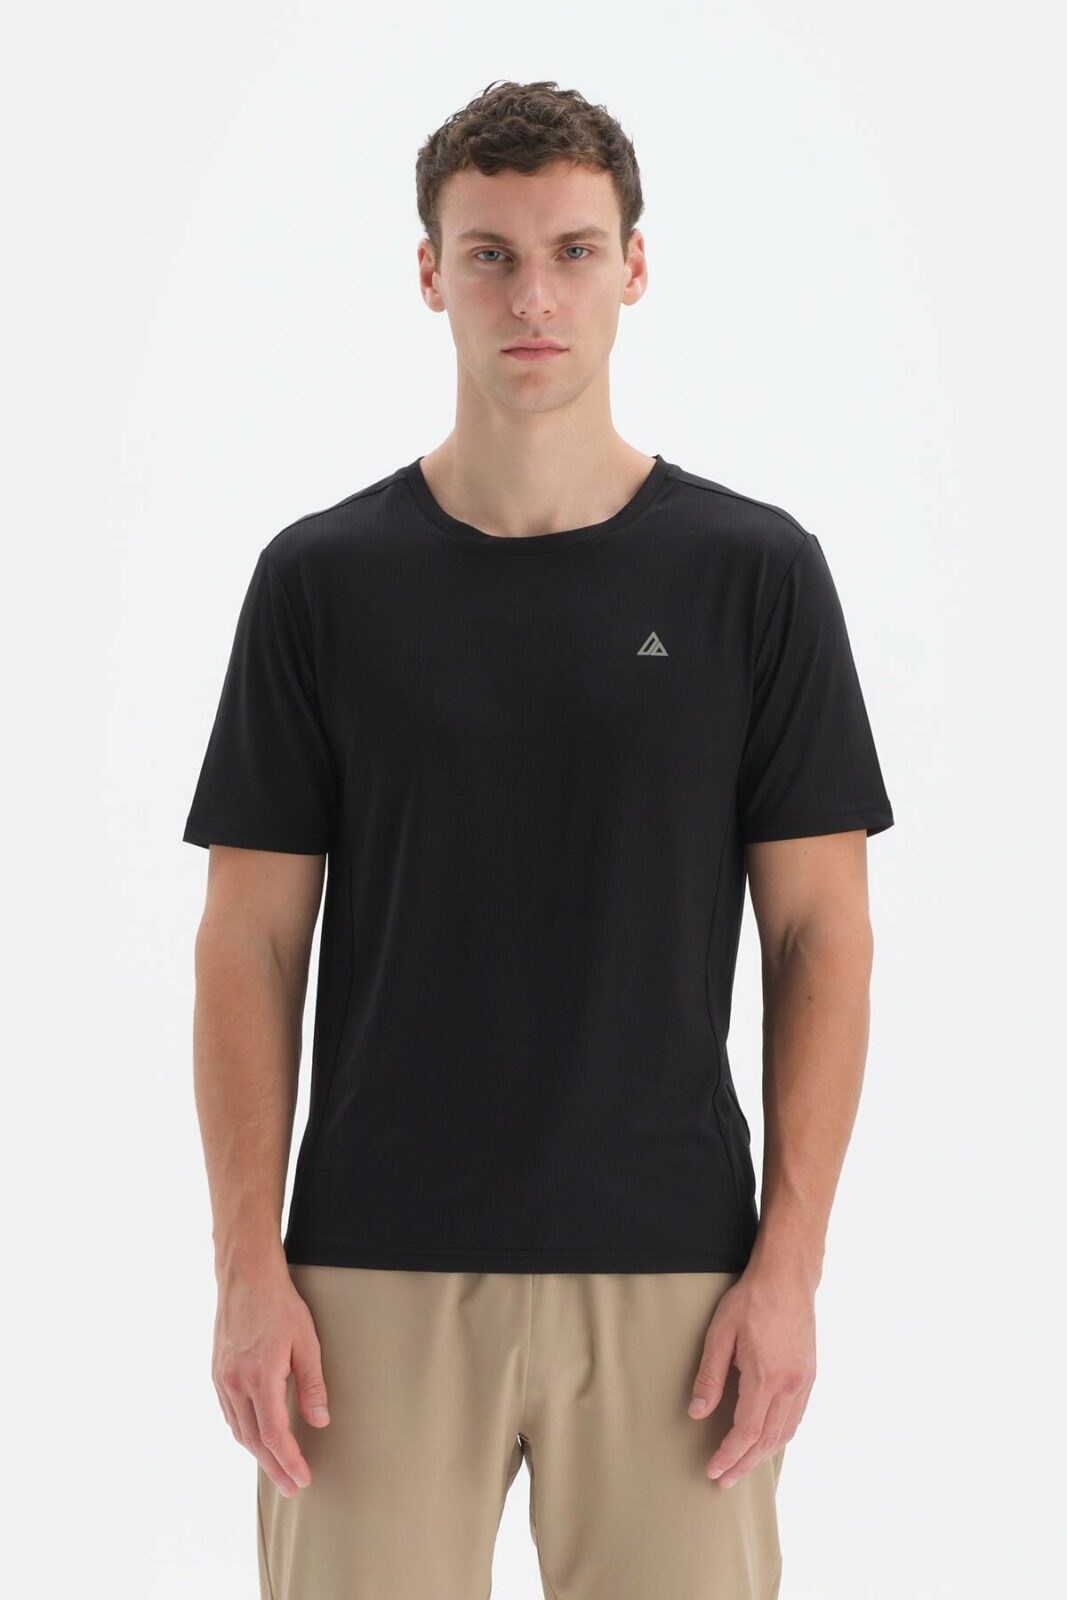 Dagi Sports T-Shirt - Black